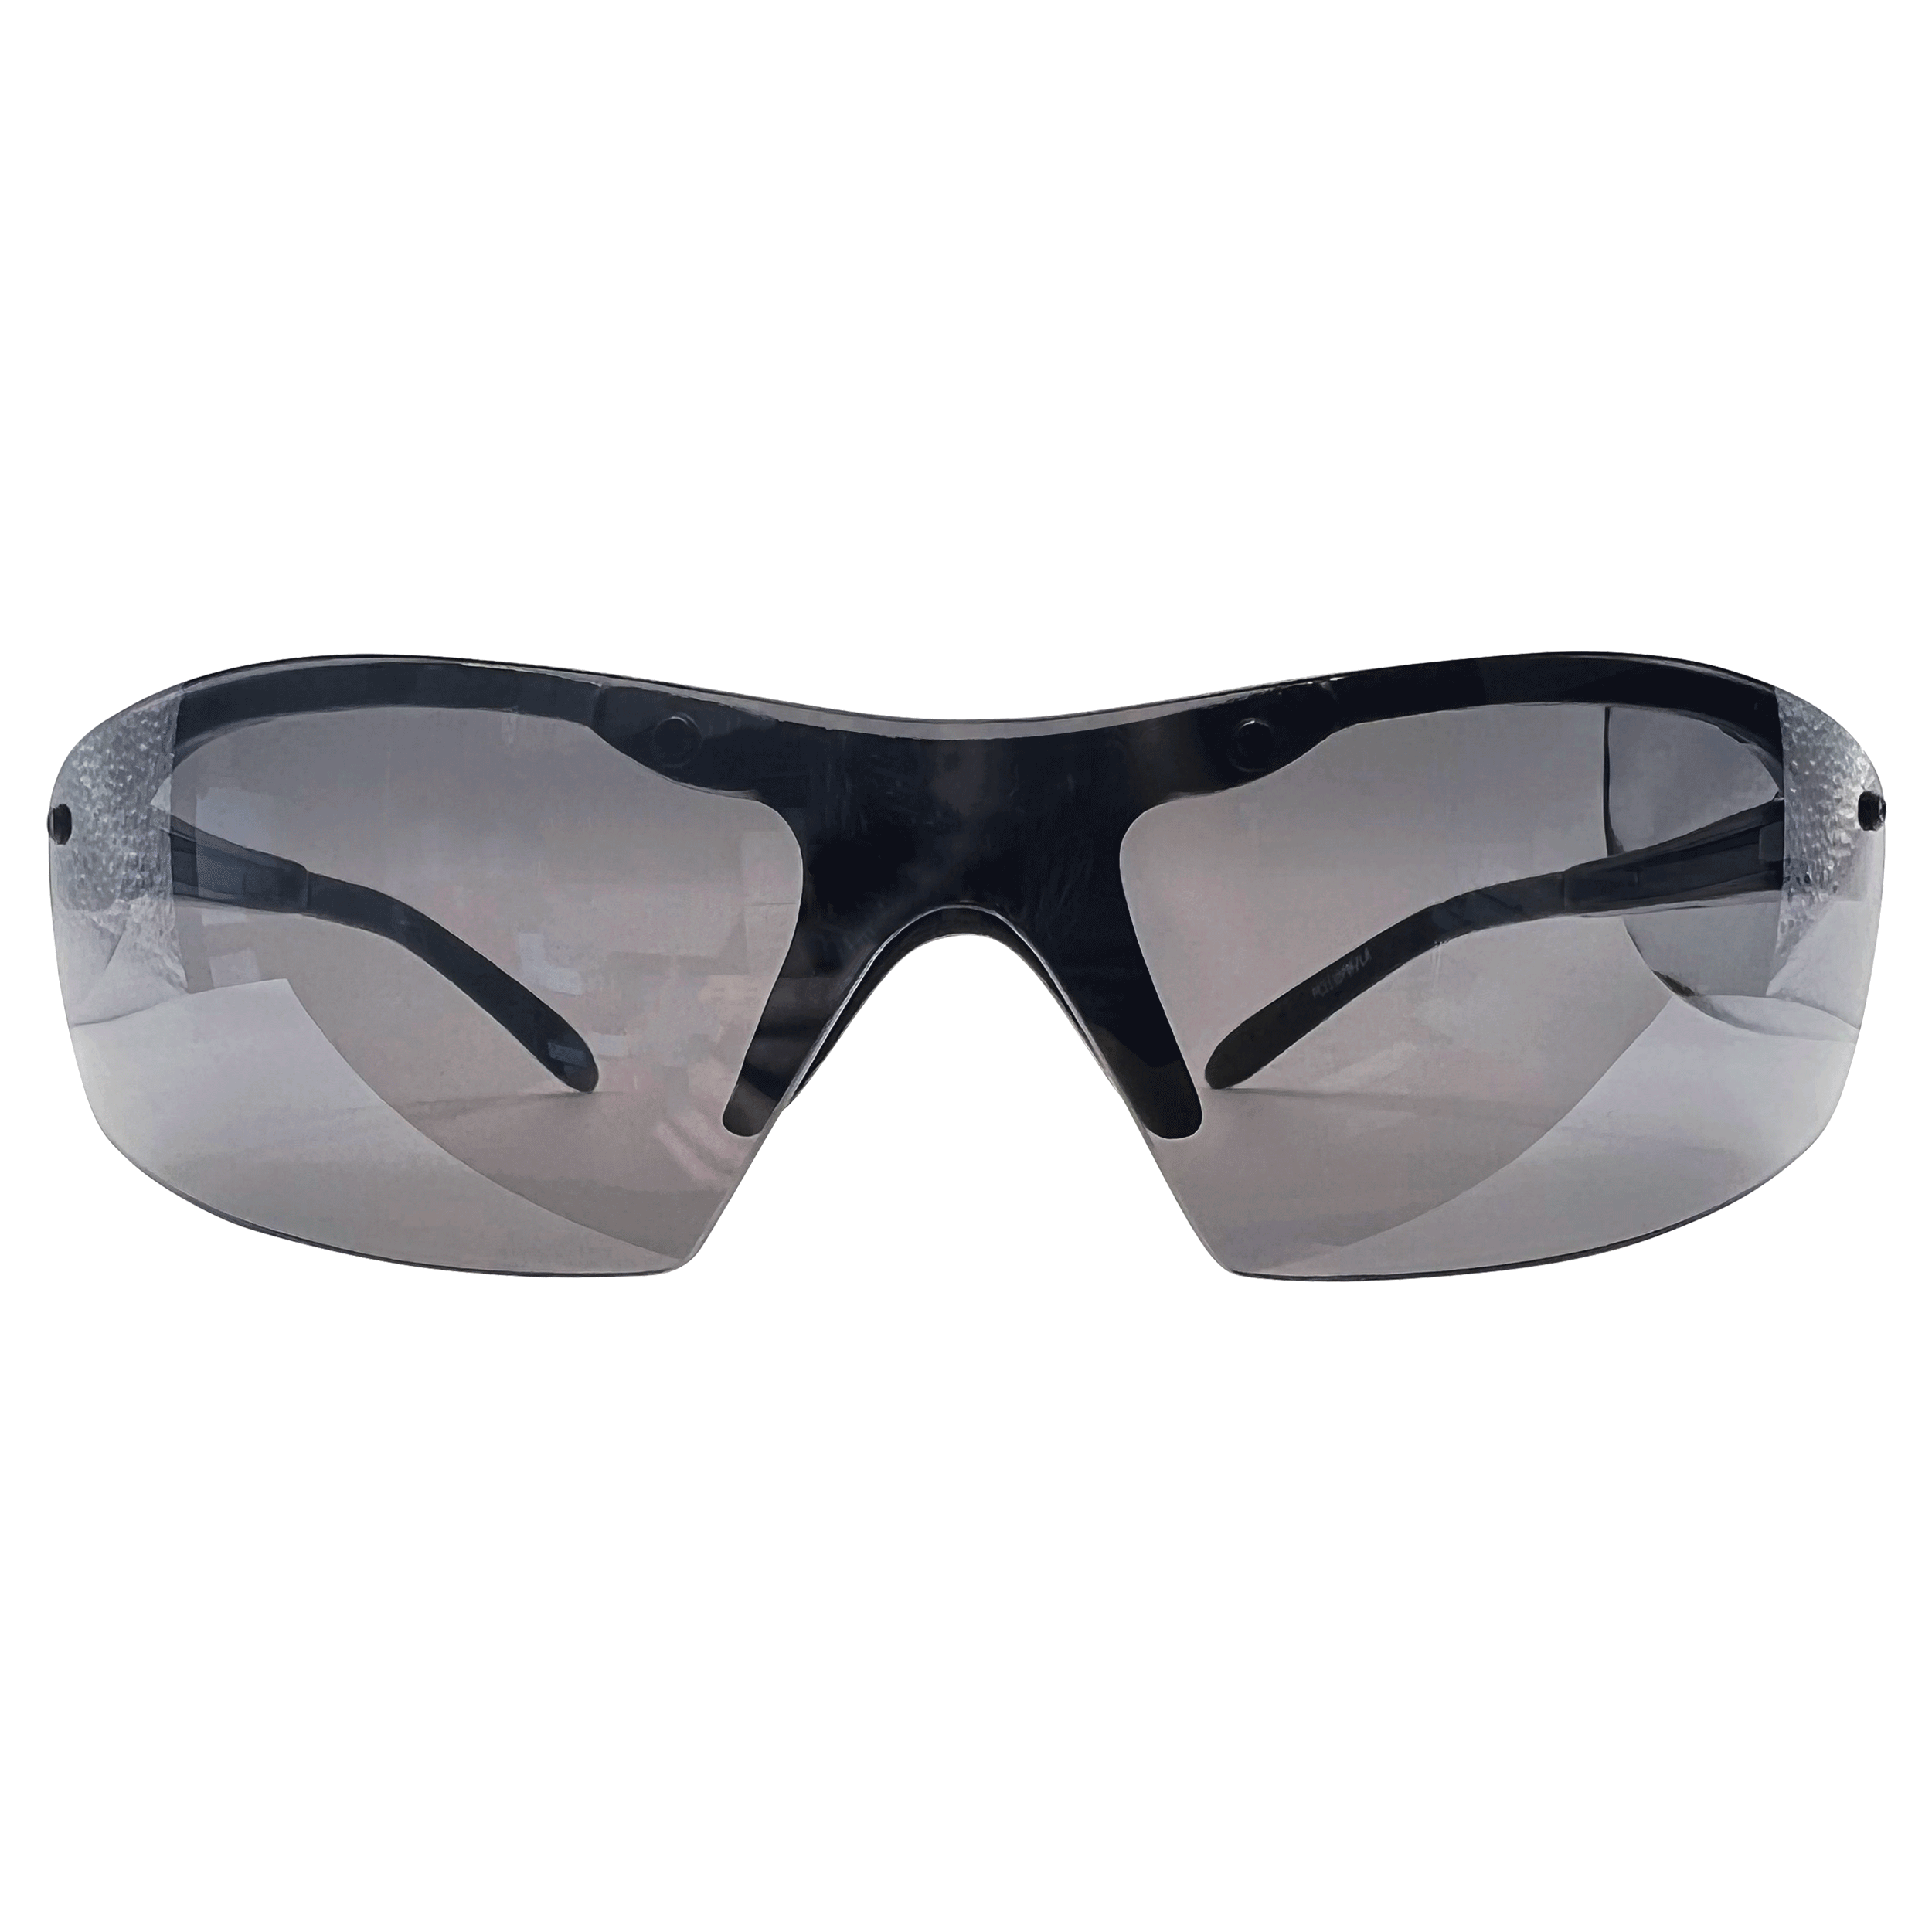 CLUBRAT Super Dark/Black Sports Sunglasses